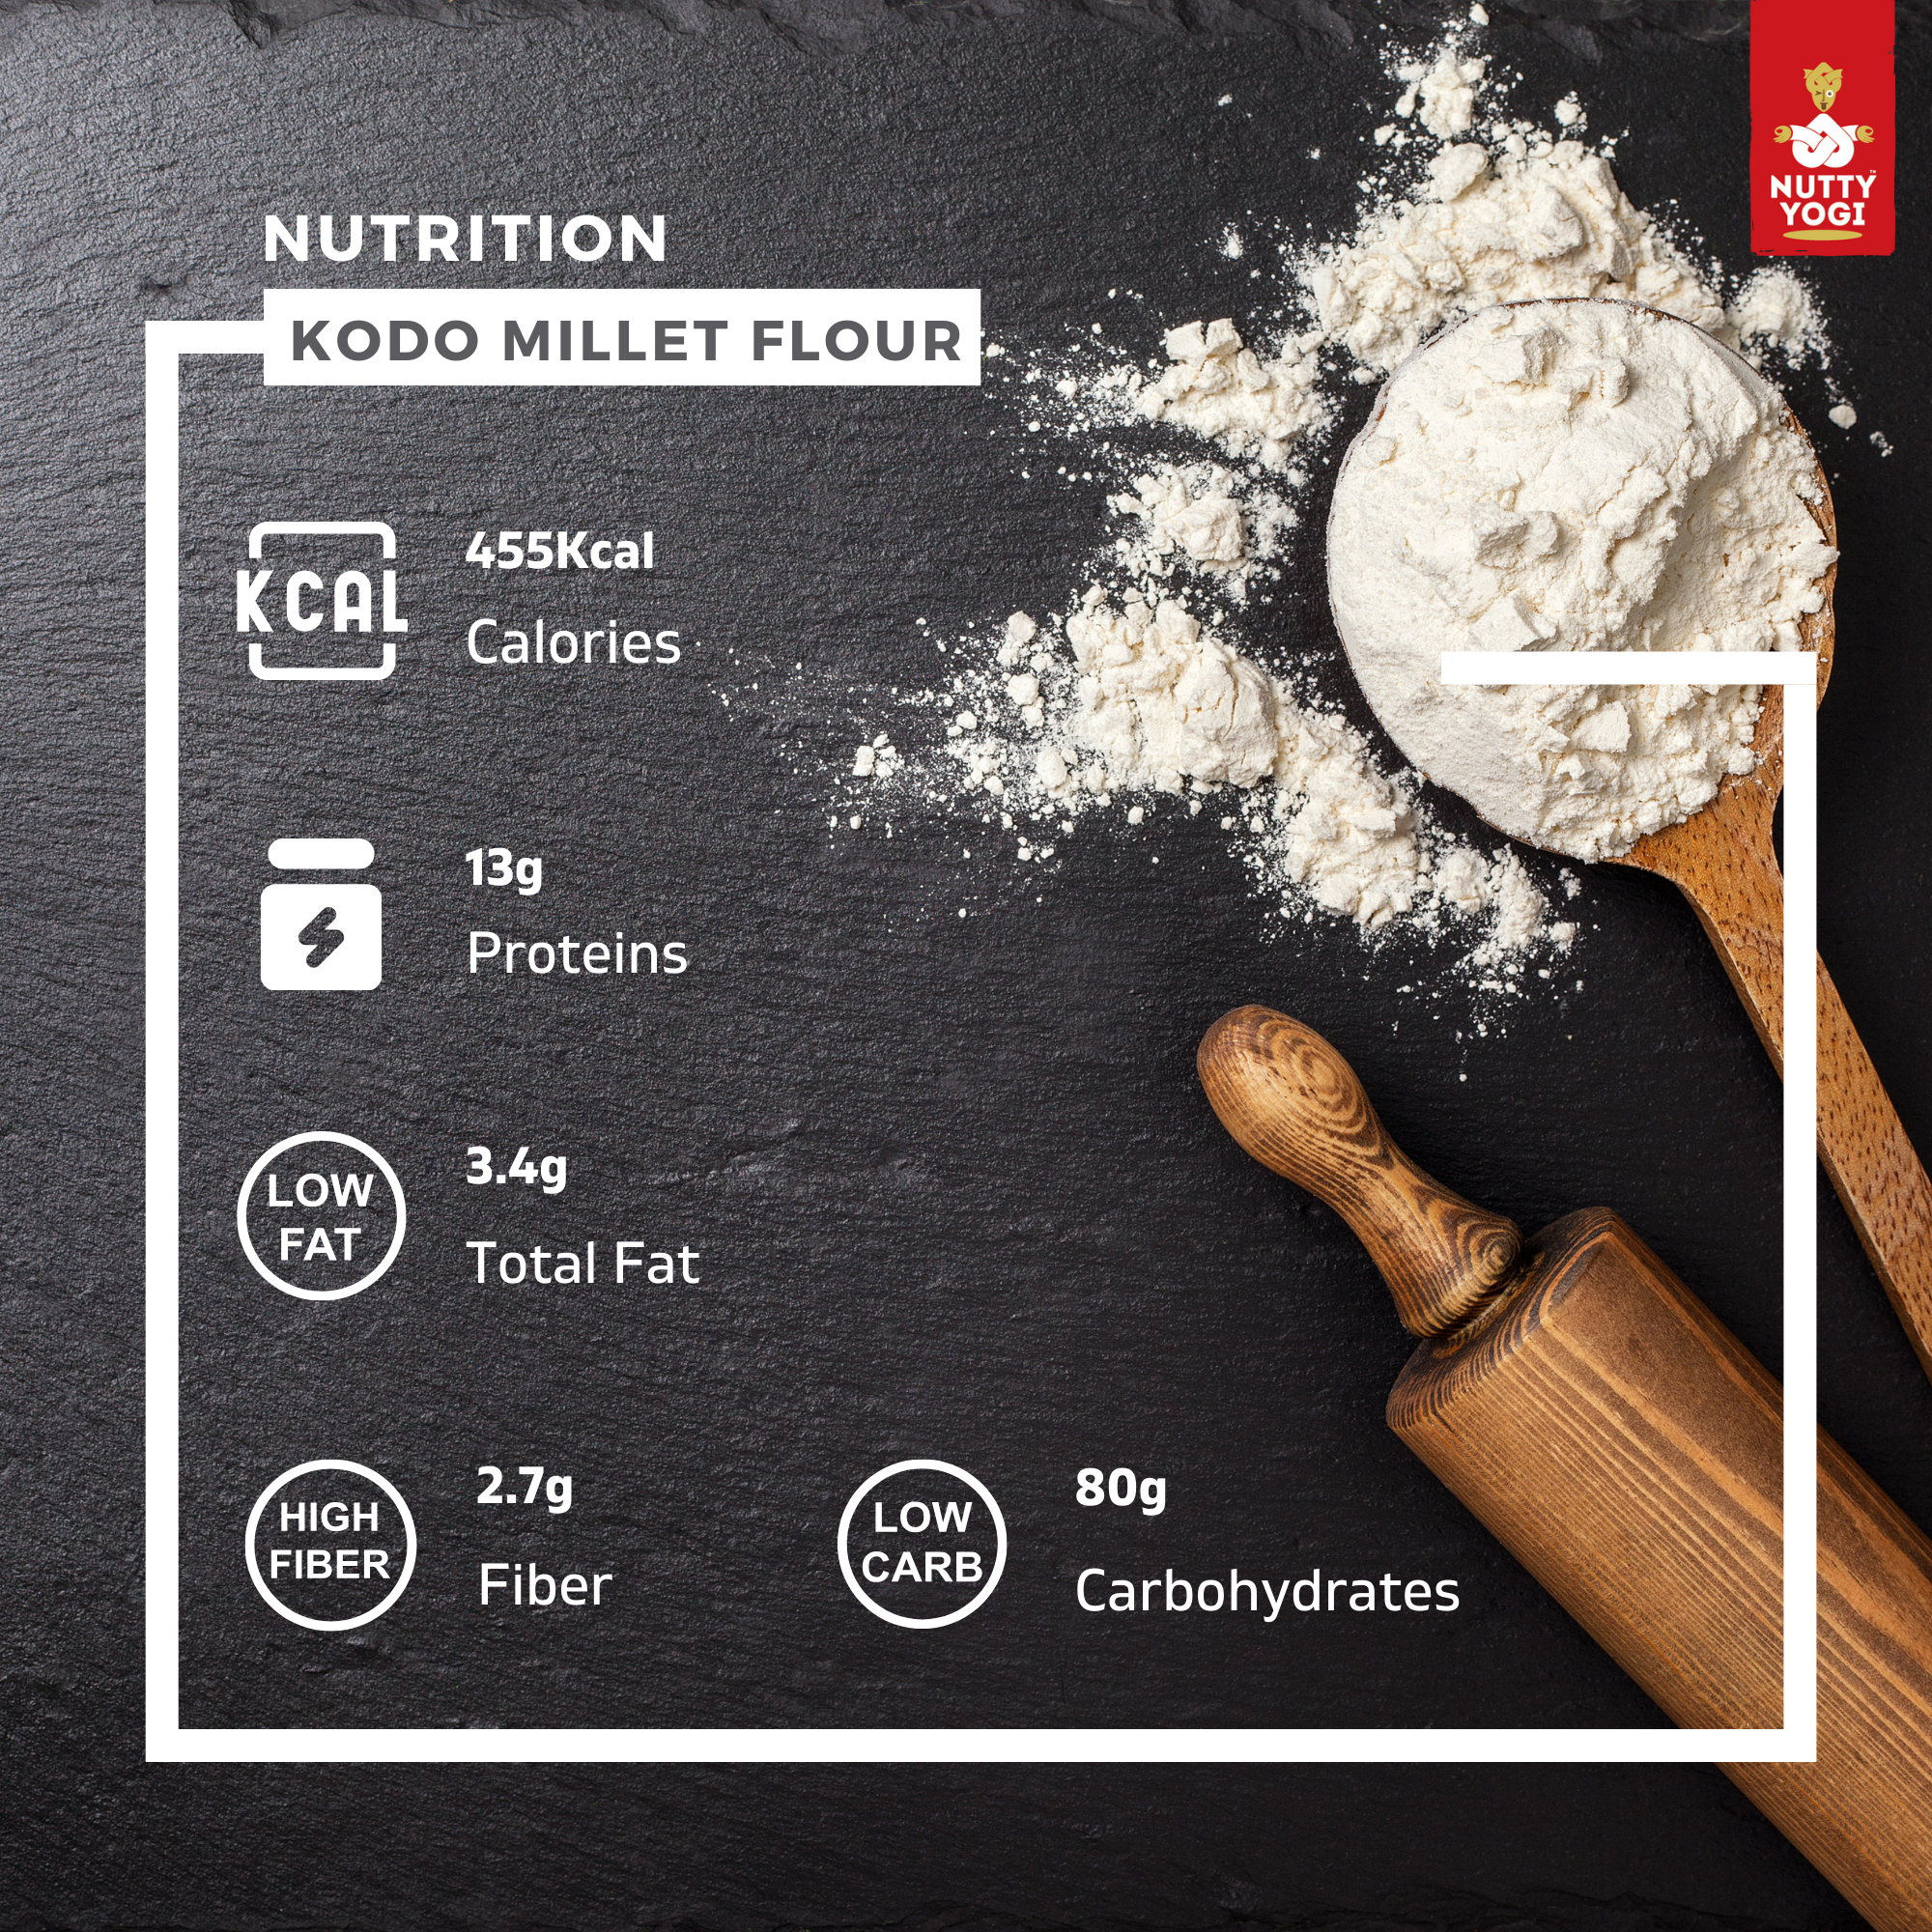 Nutty Yogi Organic Kodo Millet 1kg